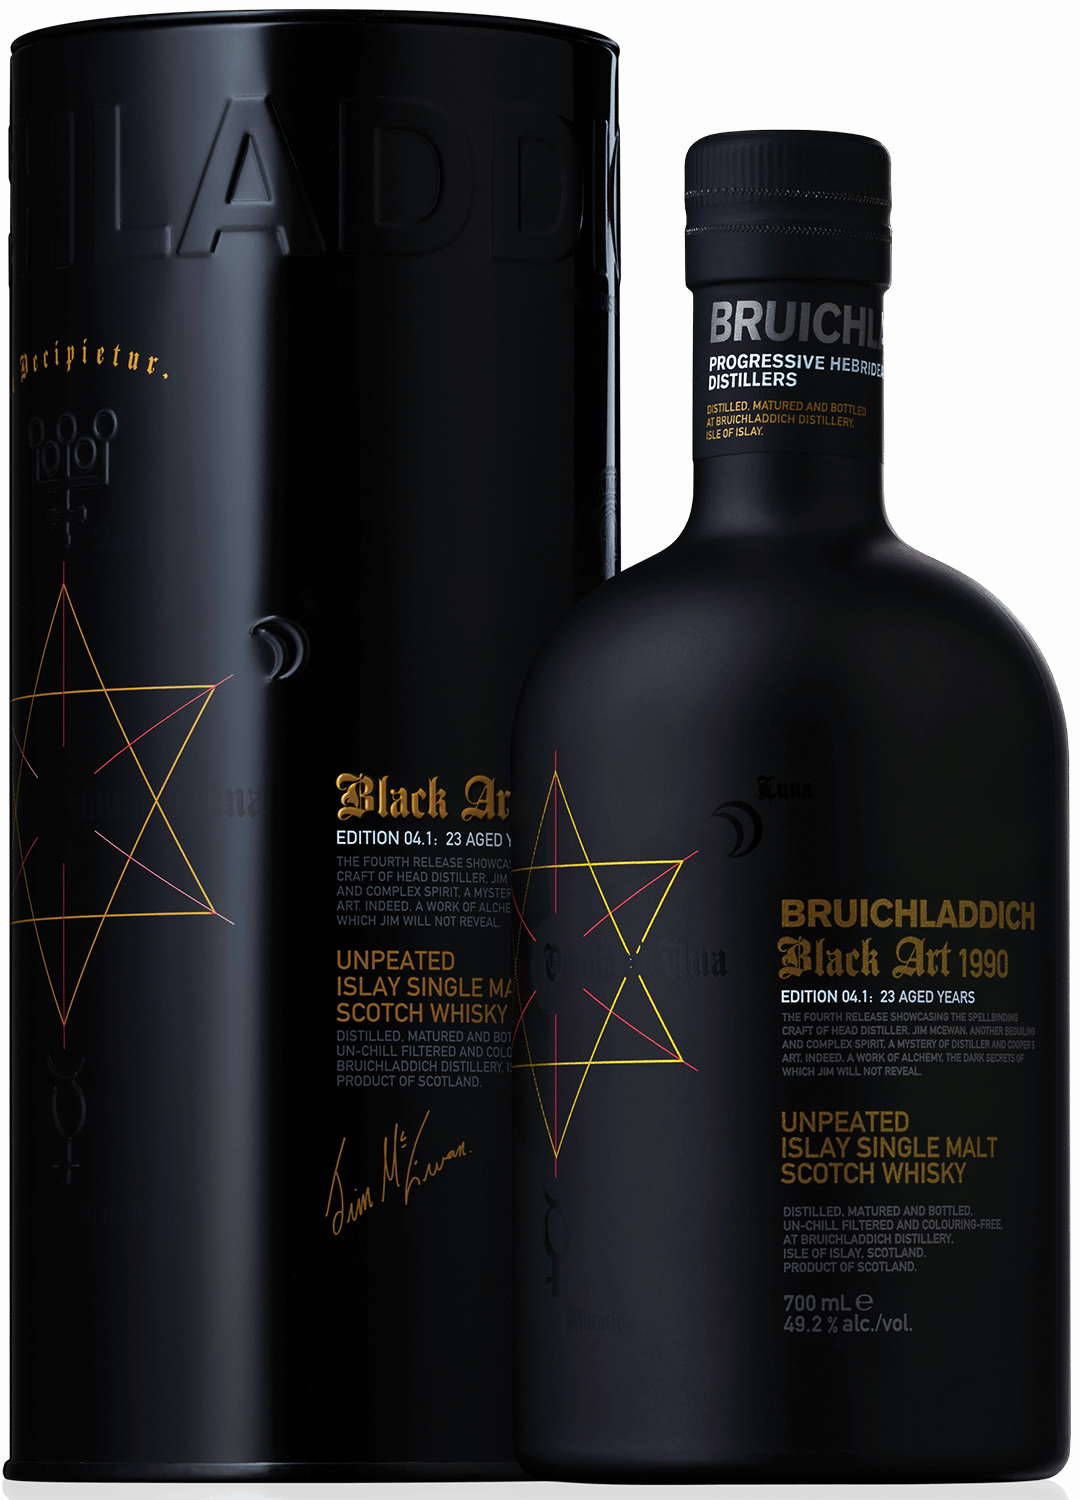 Bruichladdich Black Art Edition 04.1 23 aged years single malt scotch whisky (gift box)